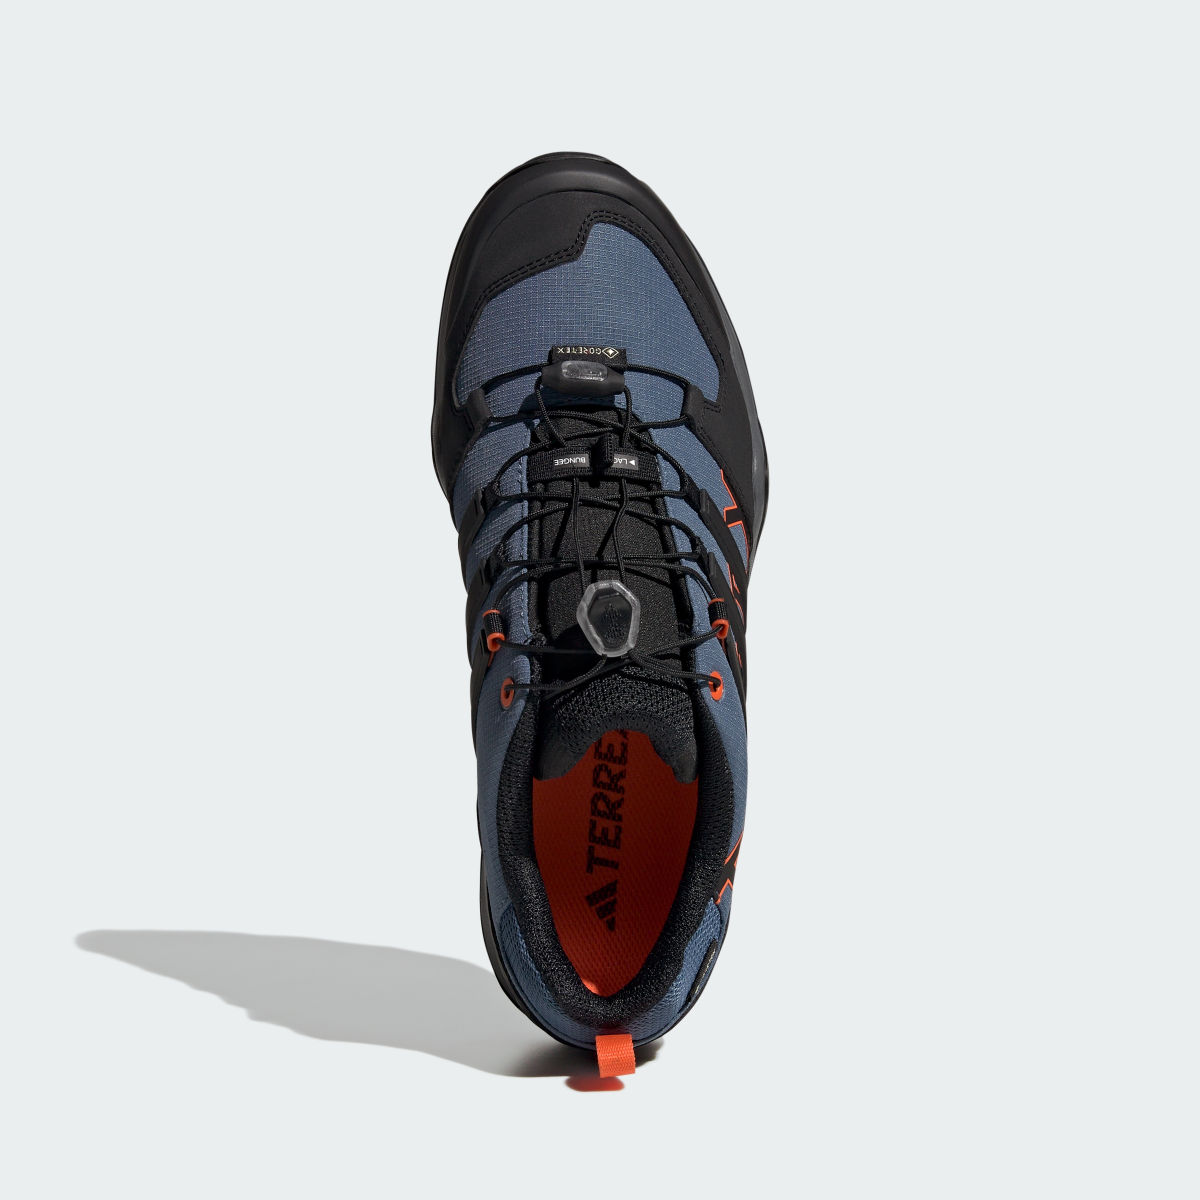 Adidas Chaussure de randonnée Terrex Swift R2 GORE-TEX. 4